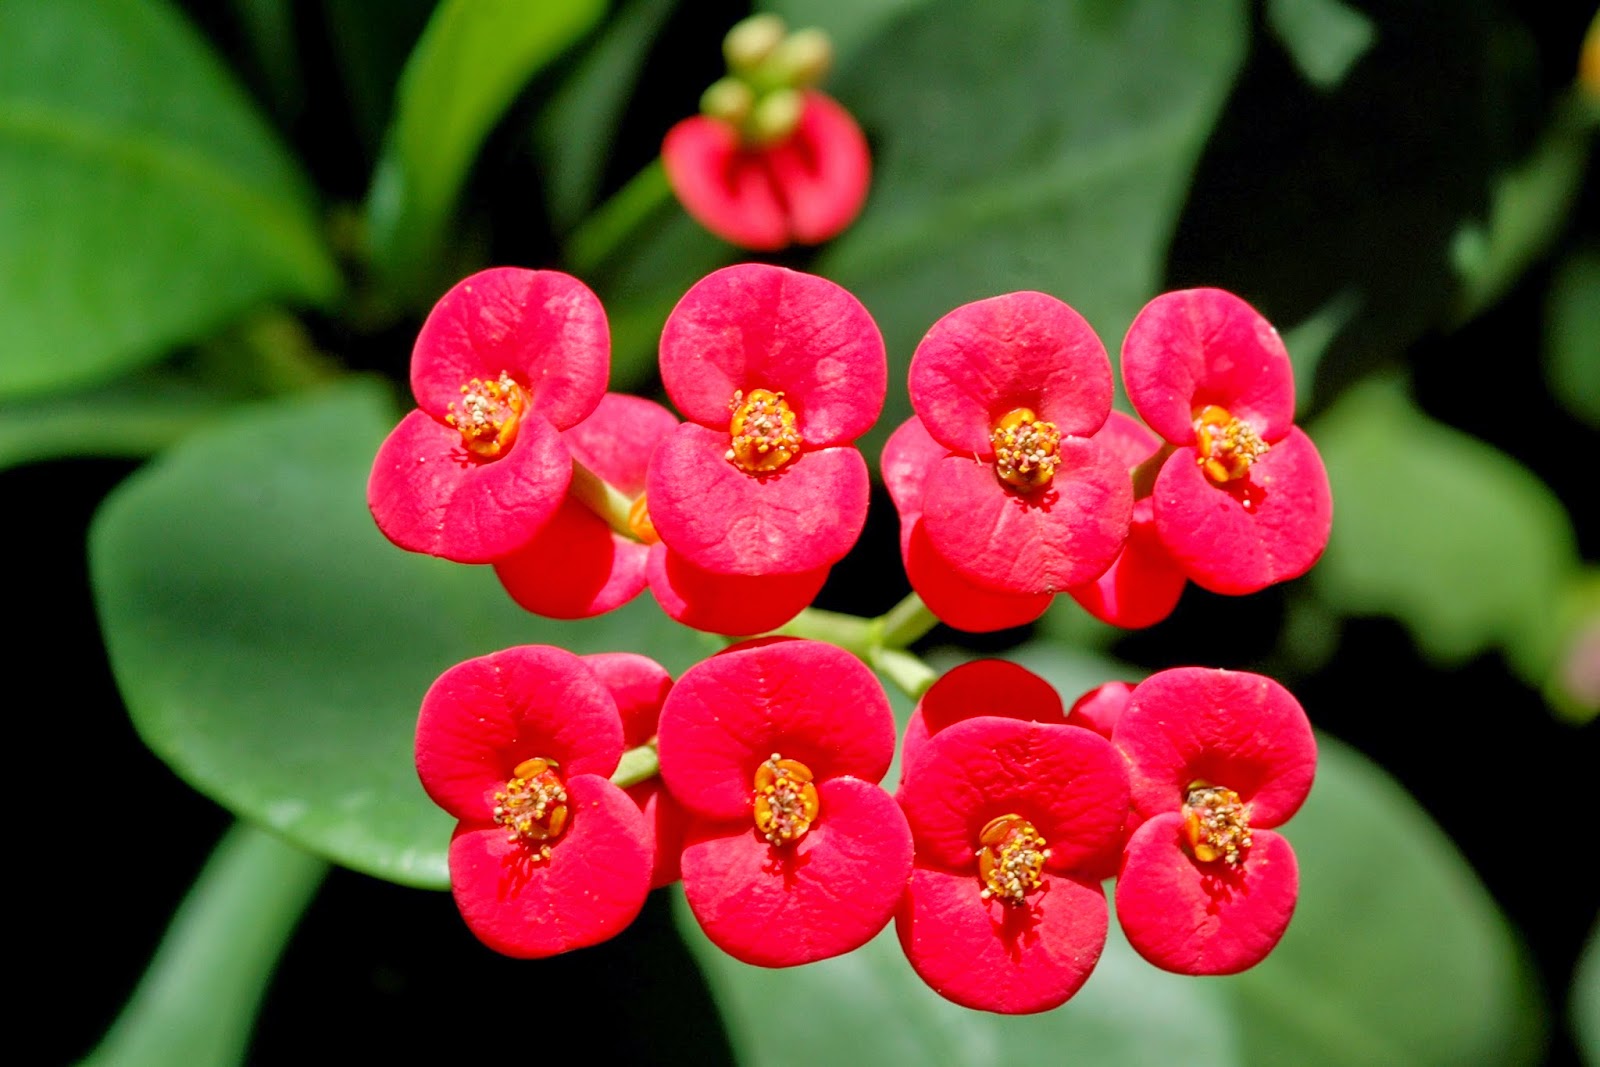  Bunga euphorbia yaitu bunga yg indah & anggun yg mempunyai banyak duri pada pecahan  Manfaat & Khasiat Bunga Euphorbia (Euphorbia milii Ch.des Moulins) 